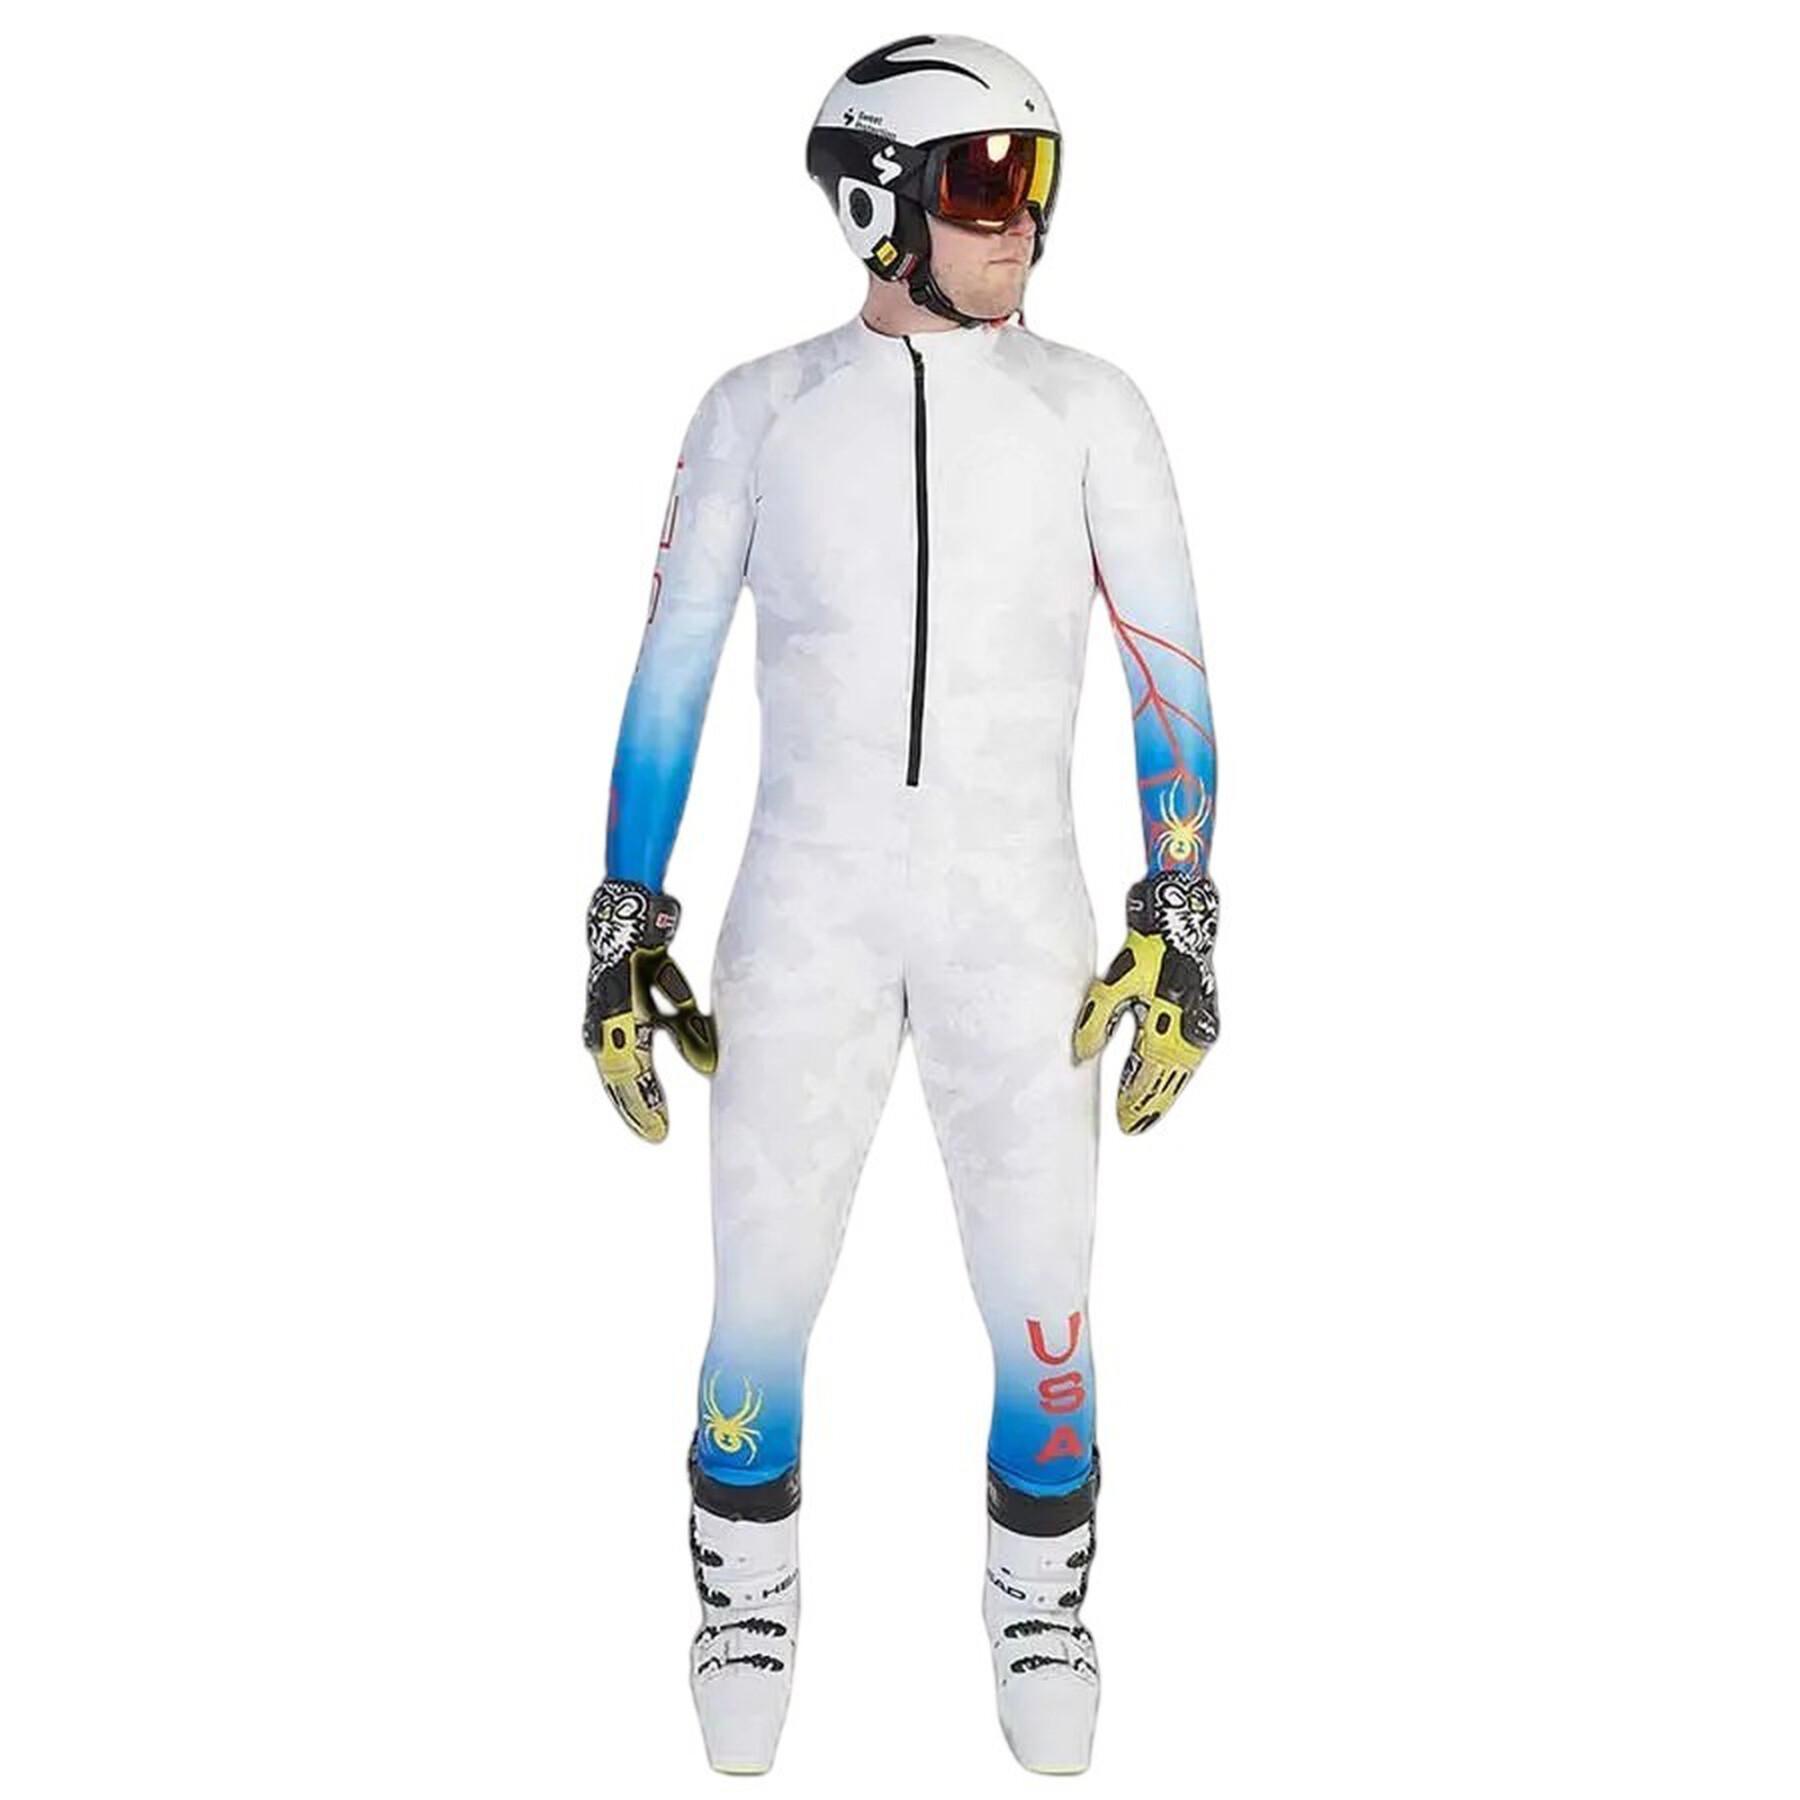 Ski suit for children Spyder Performance GS